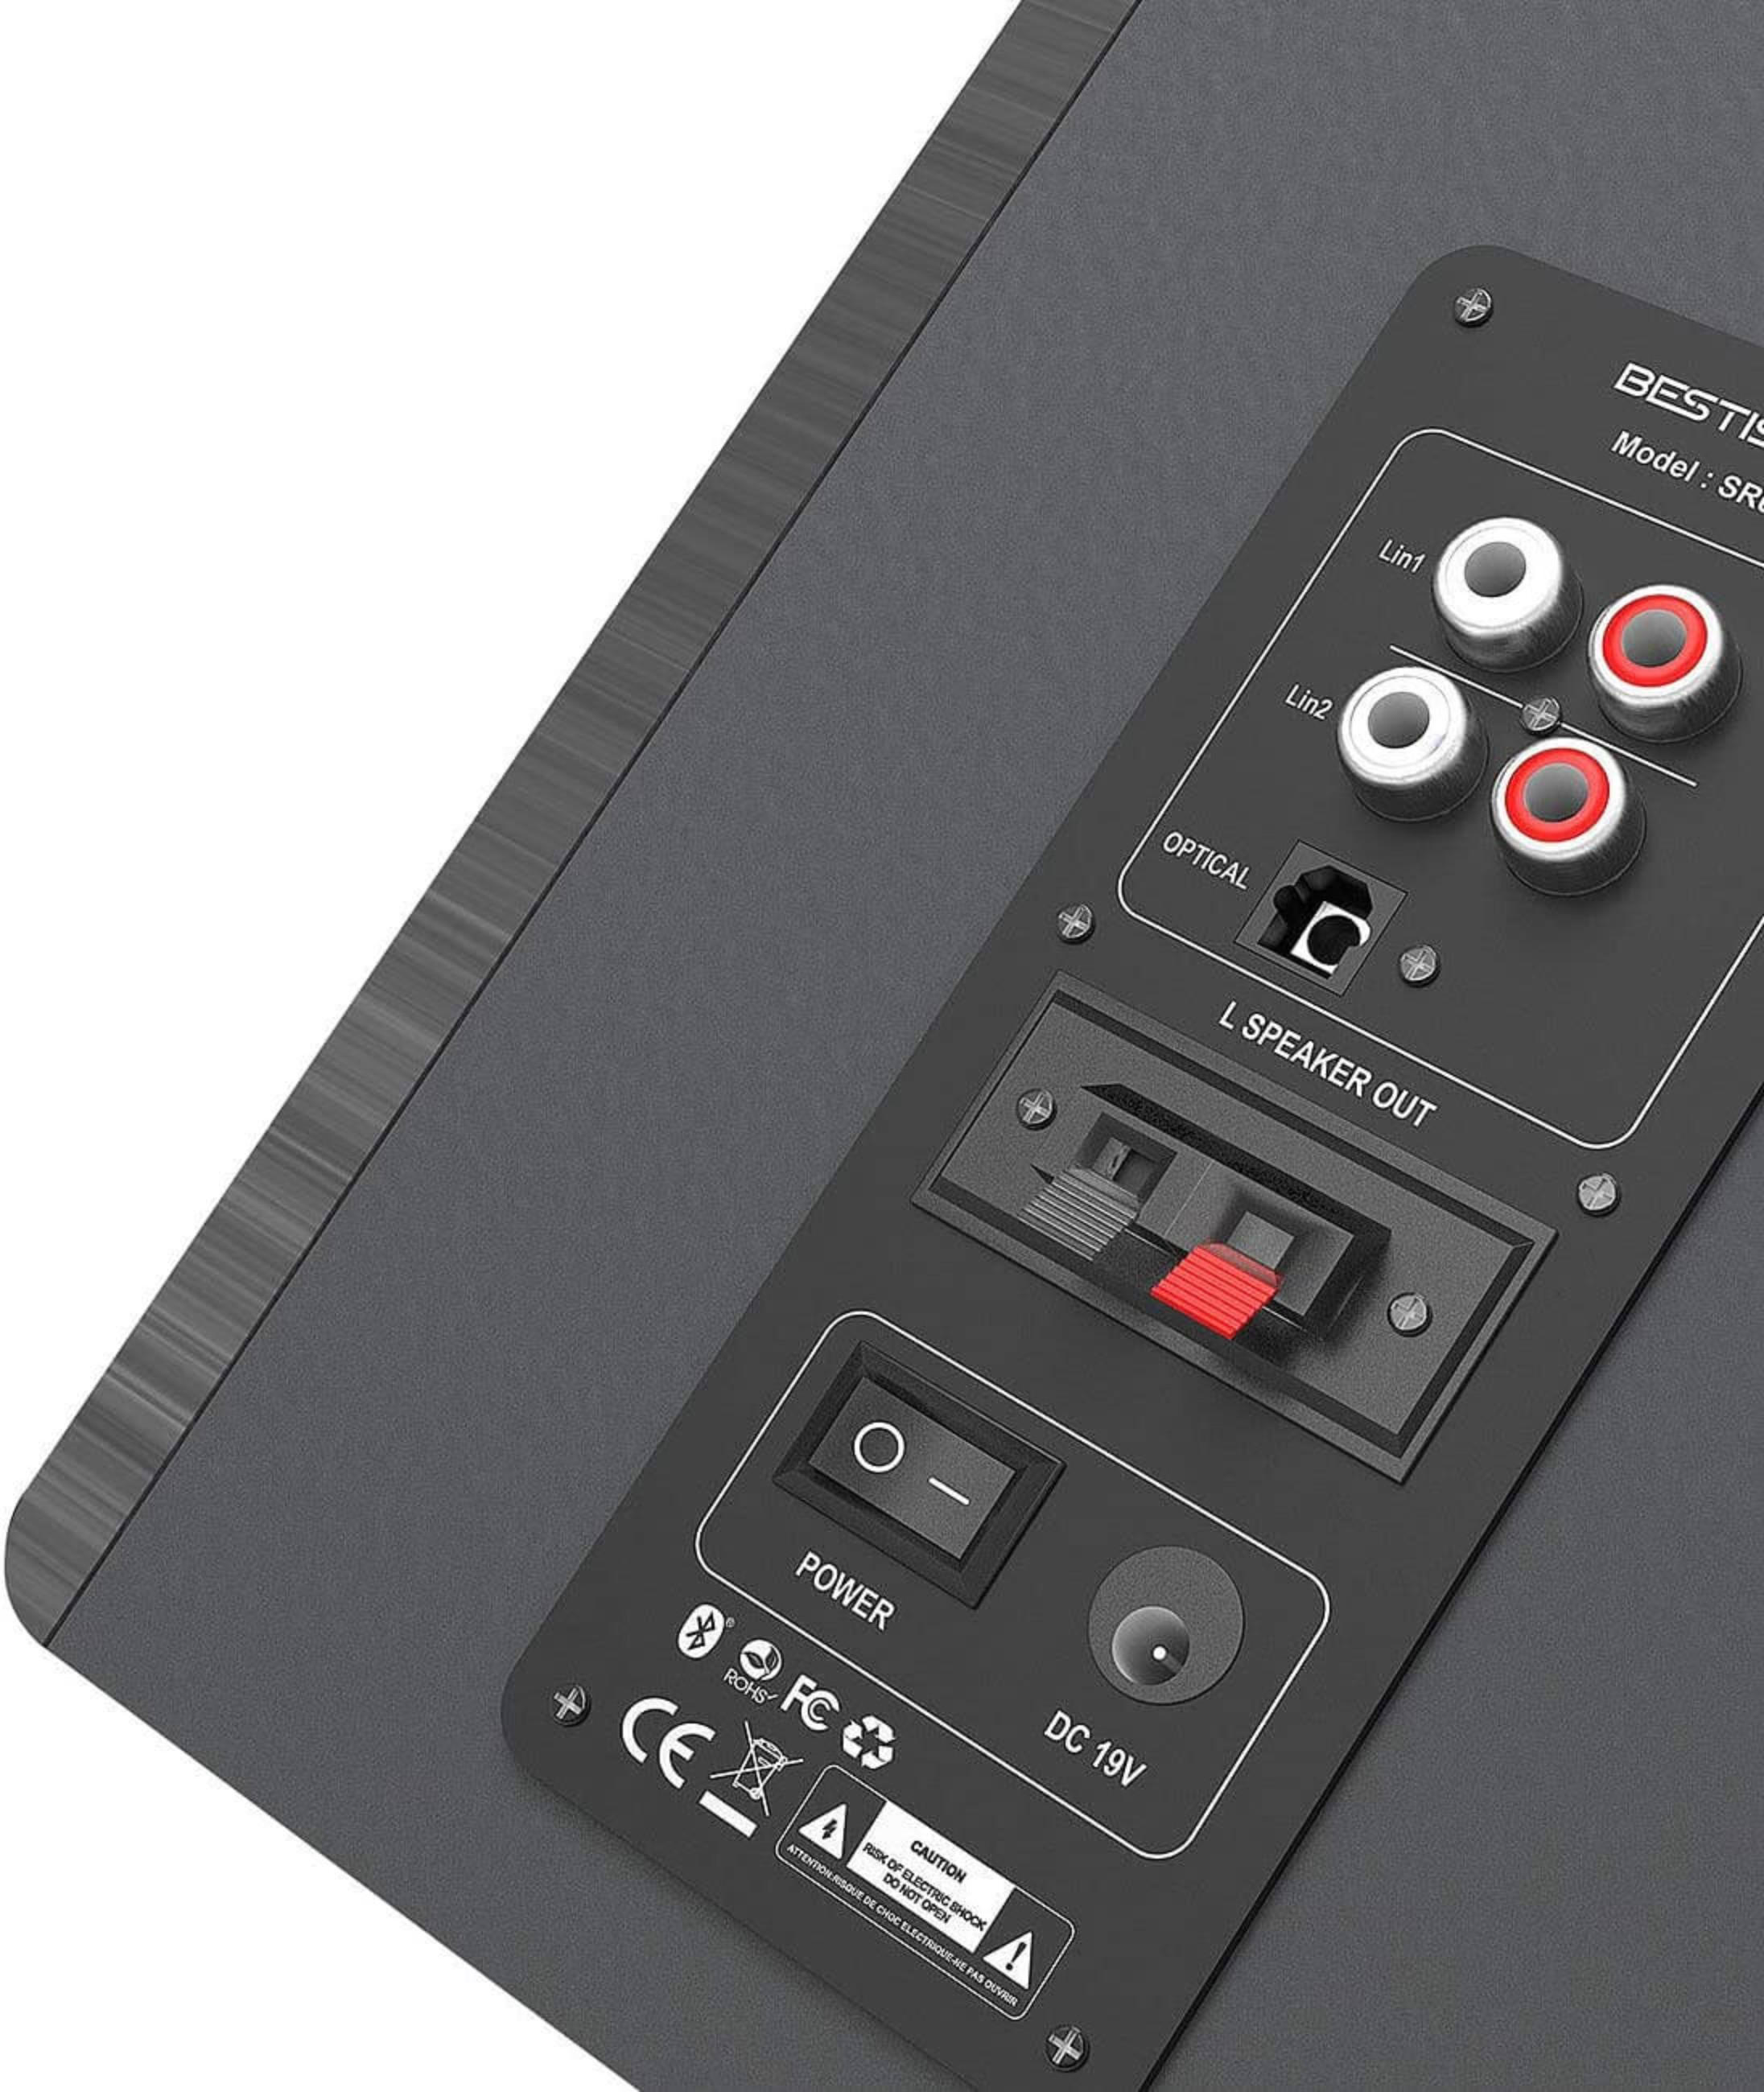 AUVISIO MSS-95.usb (Aktiver schwarz) Stereo-Lautsprecher Lautsprecher